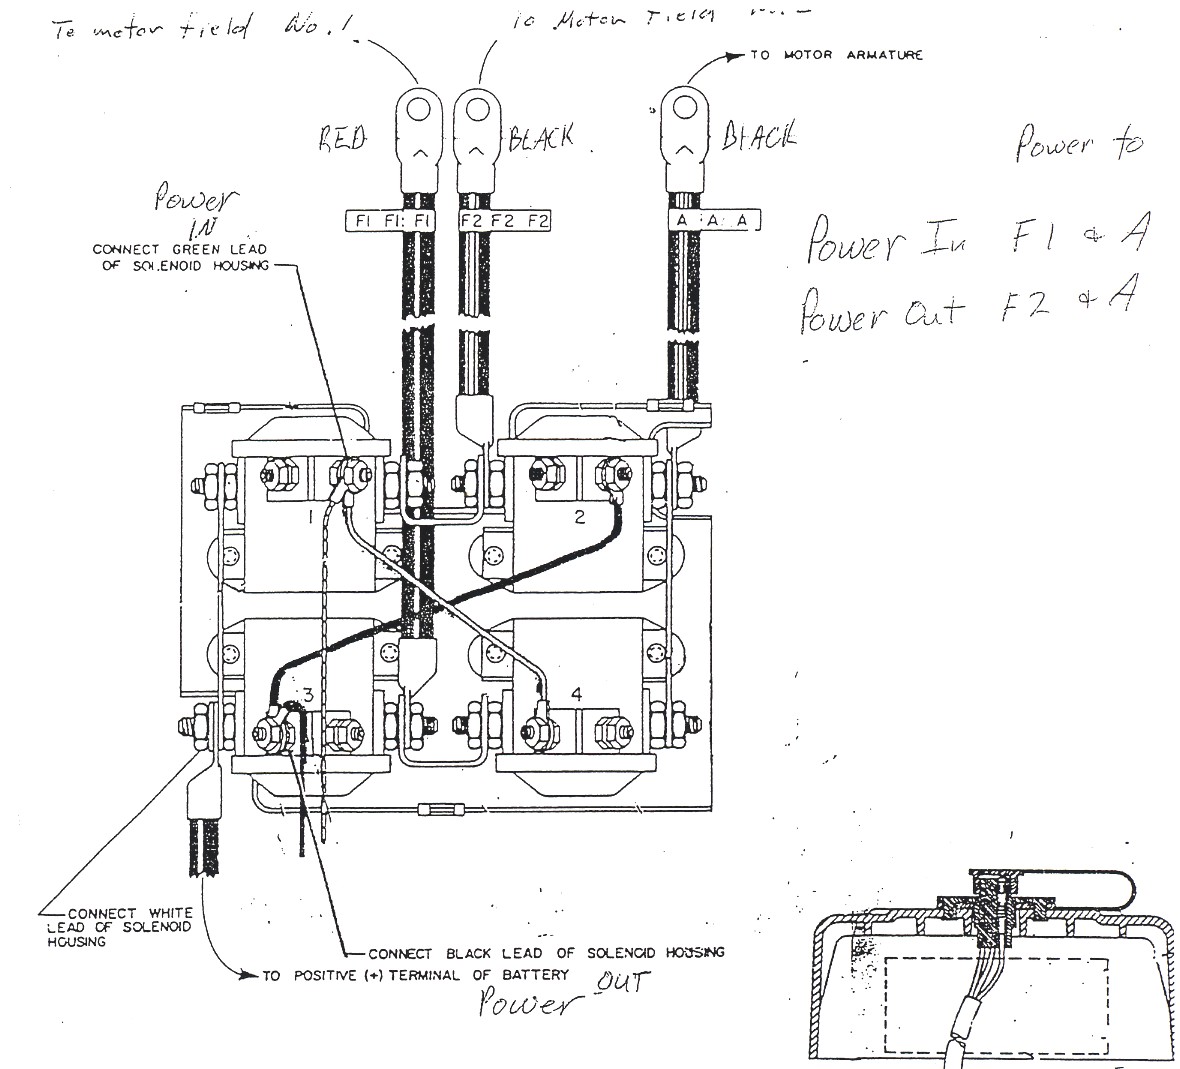 runva winch wiring diagram